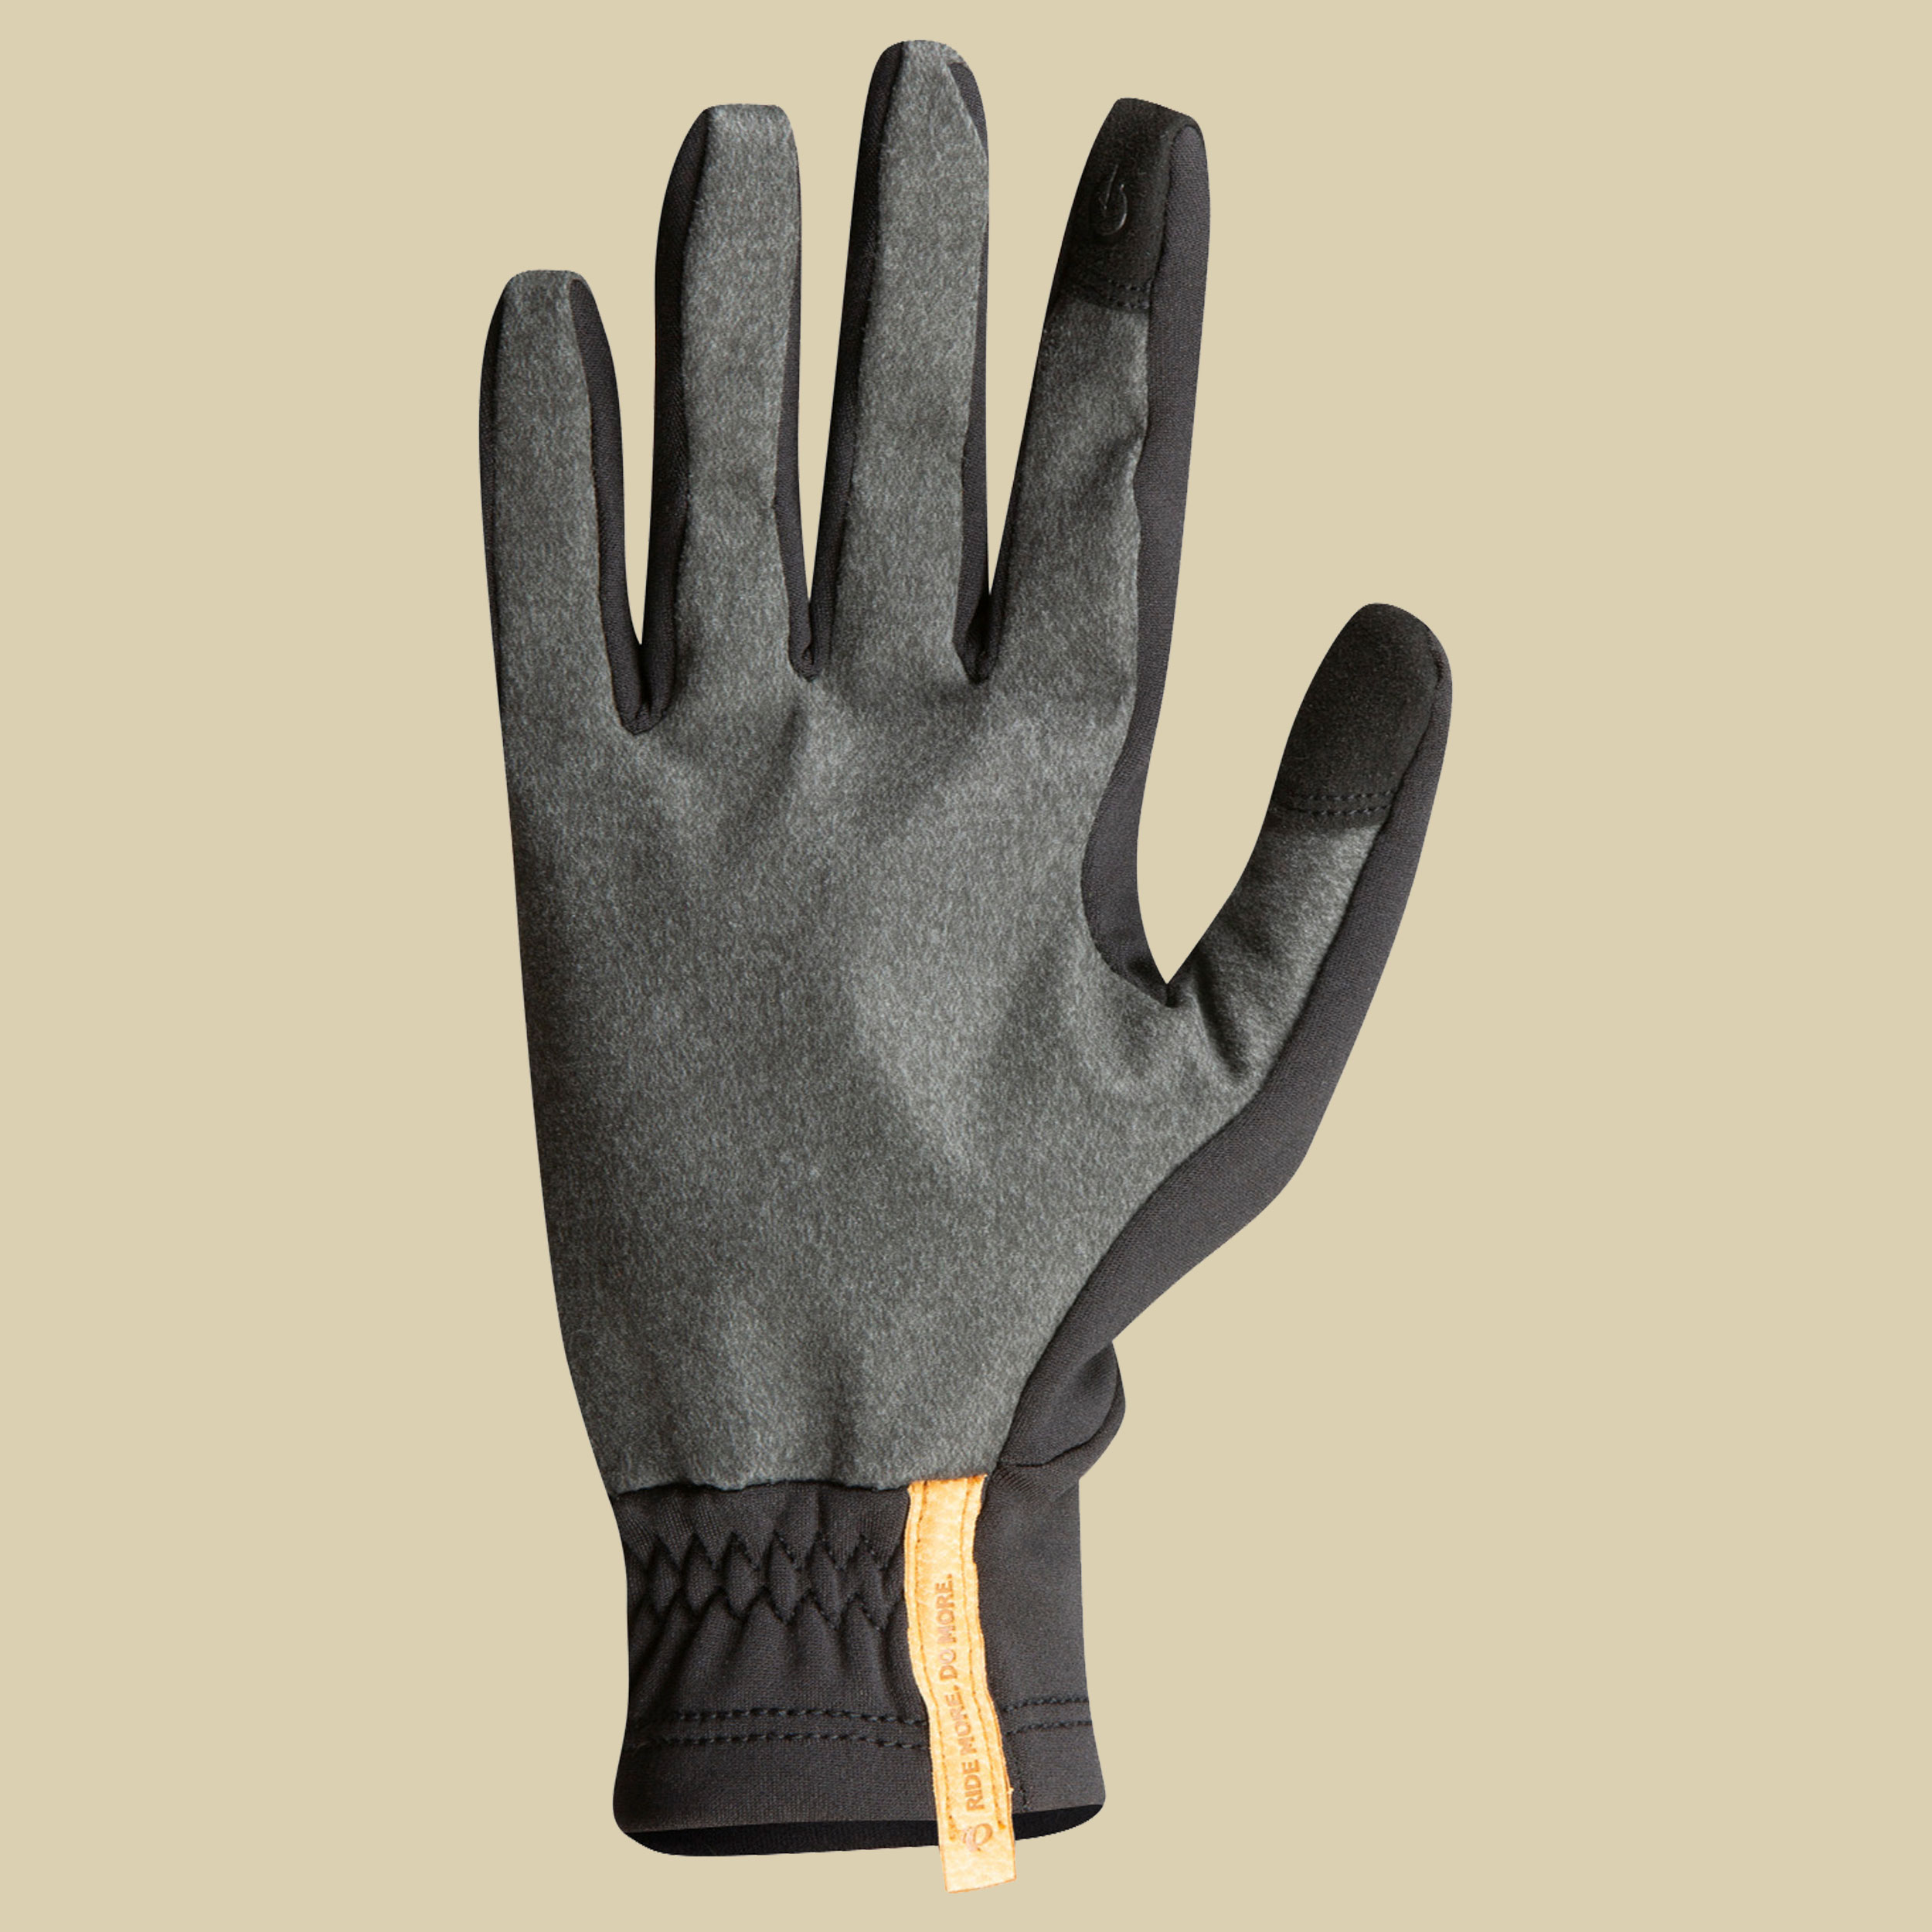 Thermal Glove Größe S Farbe black